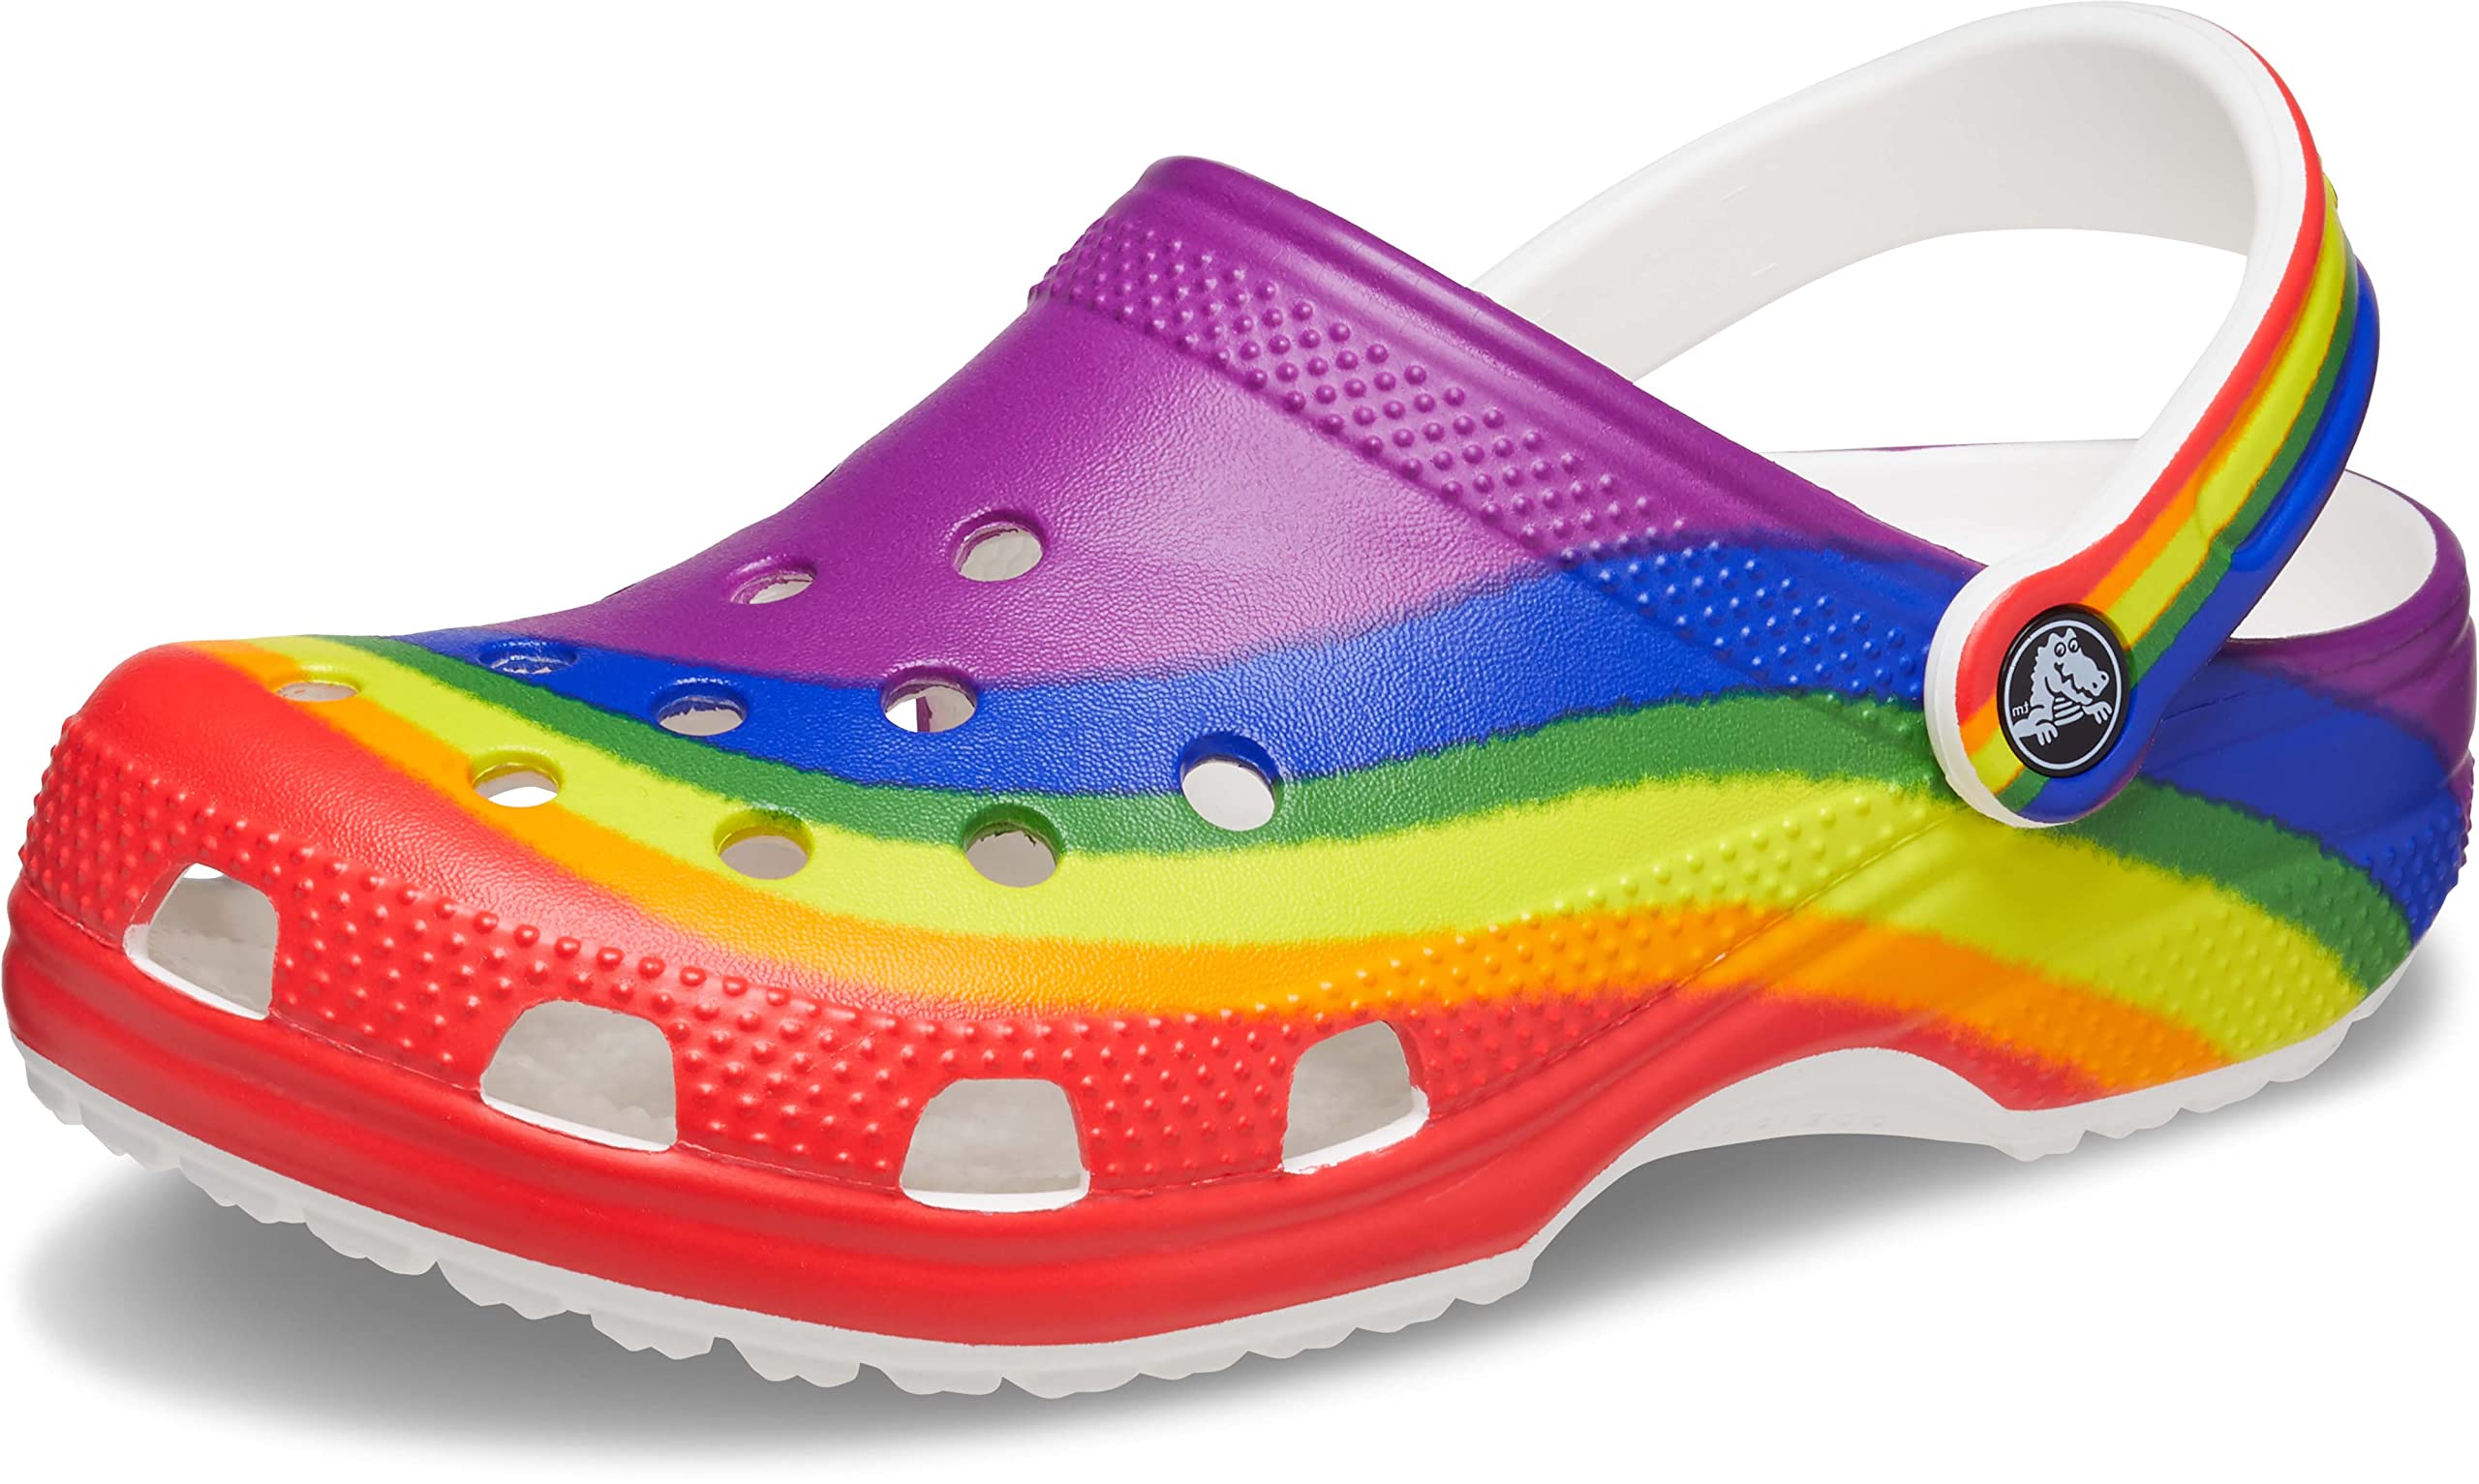 Crocs Unisex-Adult Classic Rainbow Dye Clog